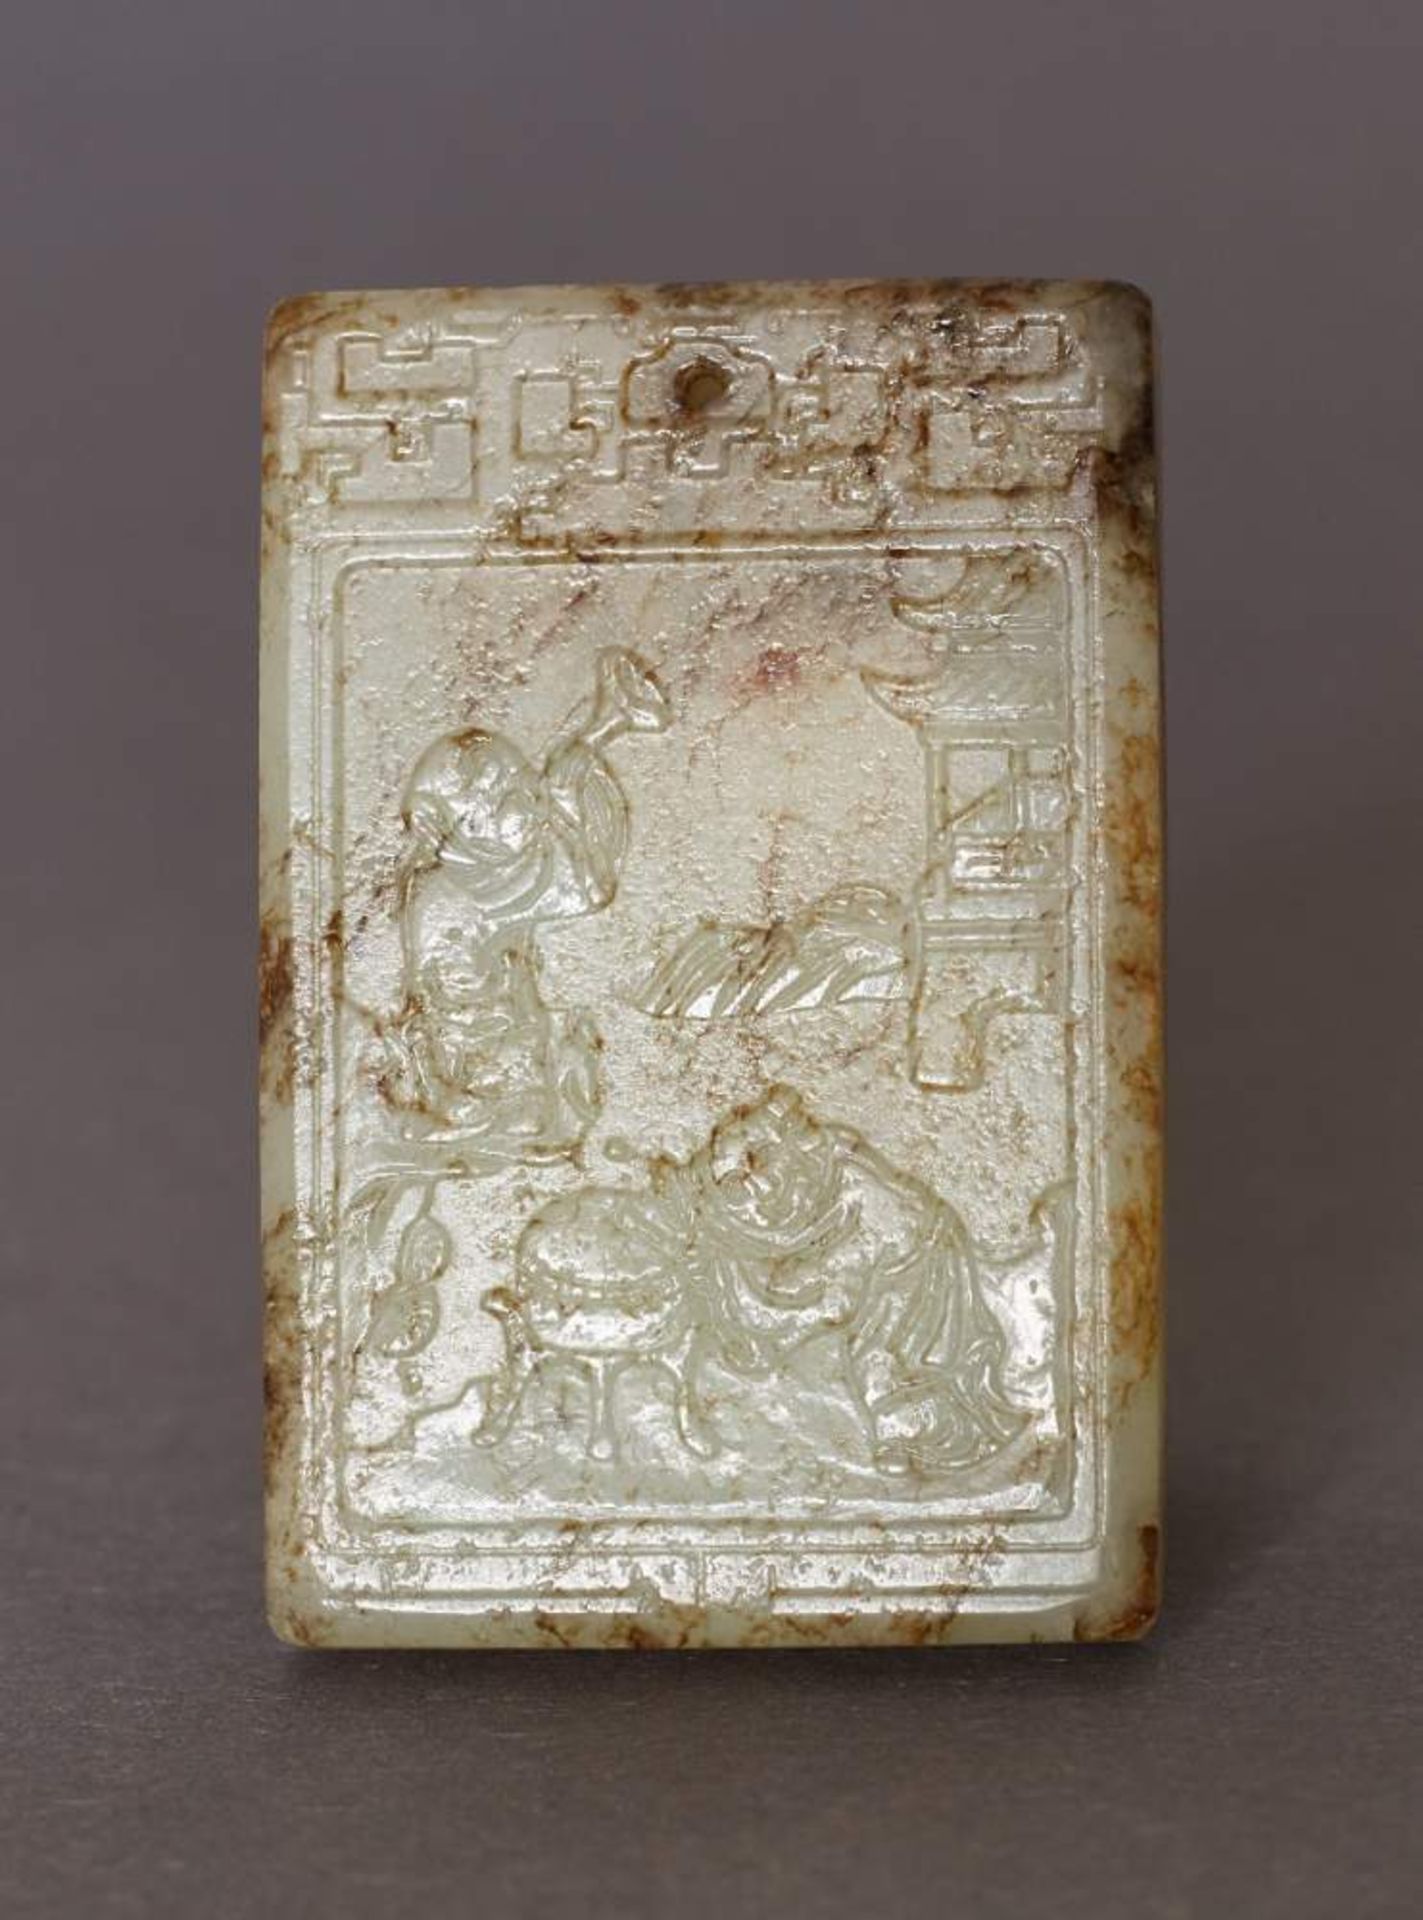 SCHMUCKANHÄNGER MIT MUSIZIERENDEN KNABENJade. China, Qing-Dynastie, frühes 19. Jh.Rechteckige